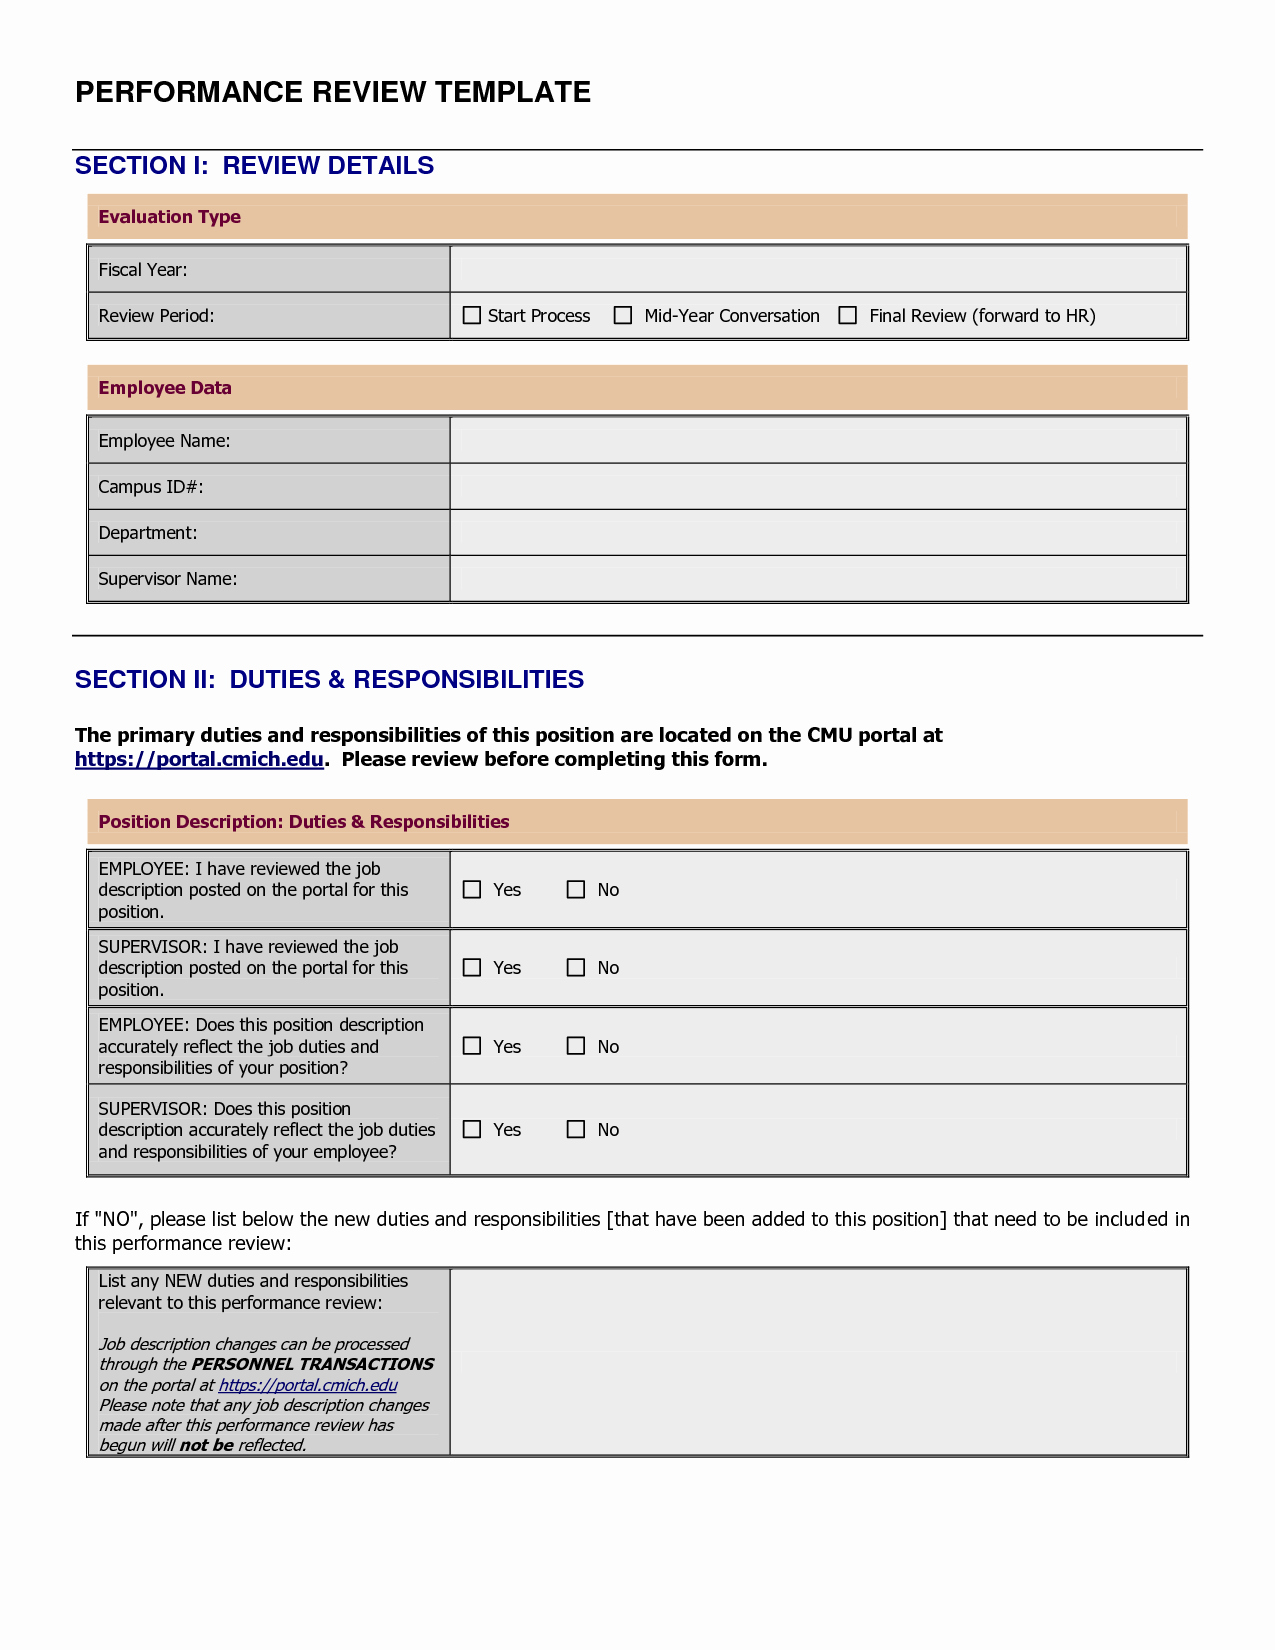 Appraisal Template Staff Document 31 Performance